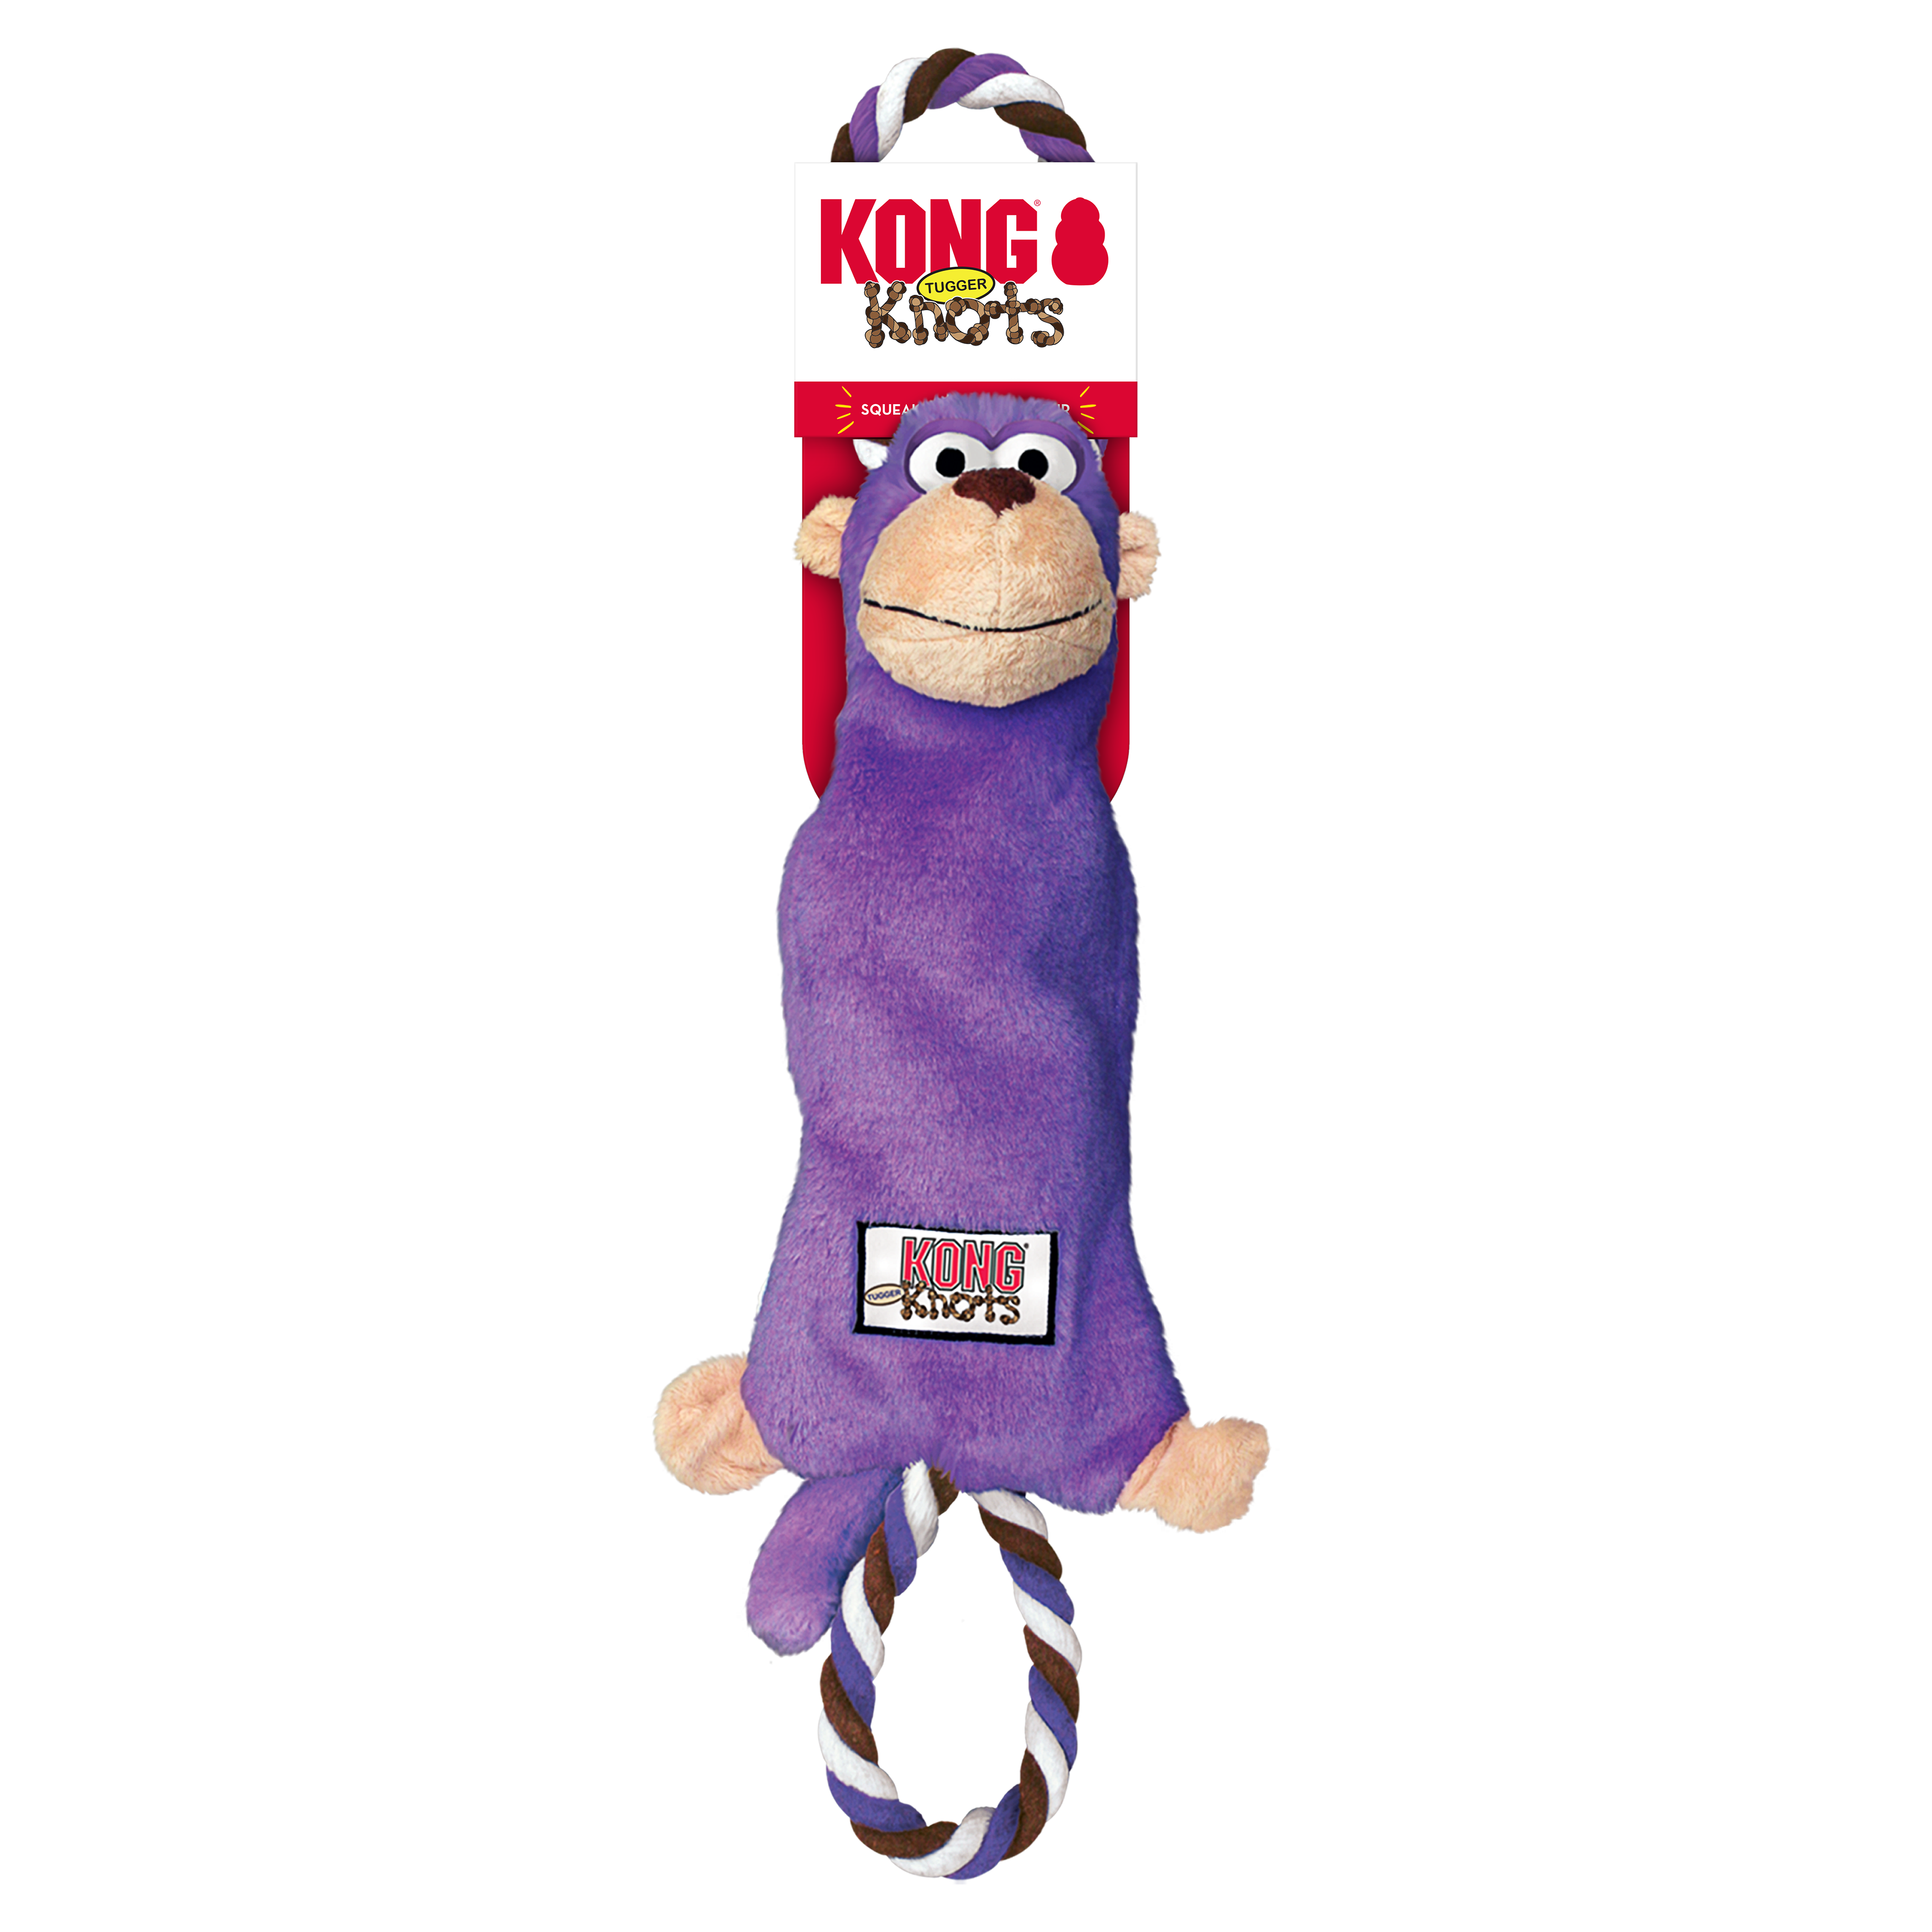 Imagem do produto na embalagem do Tugger Knots Monkey